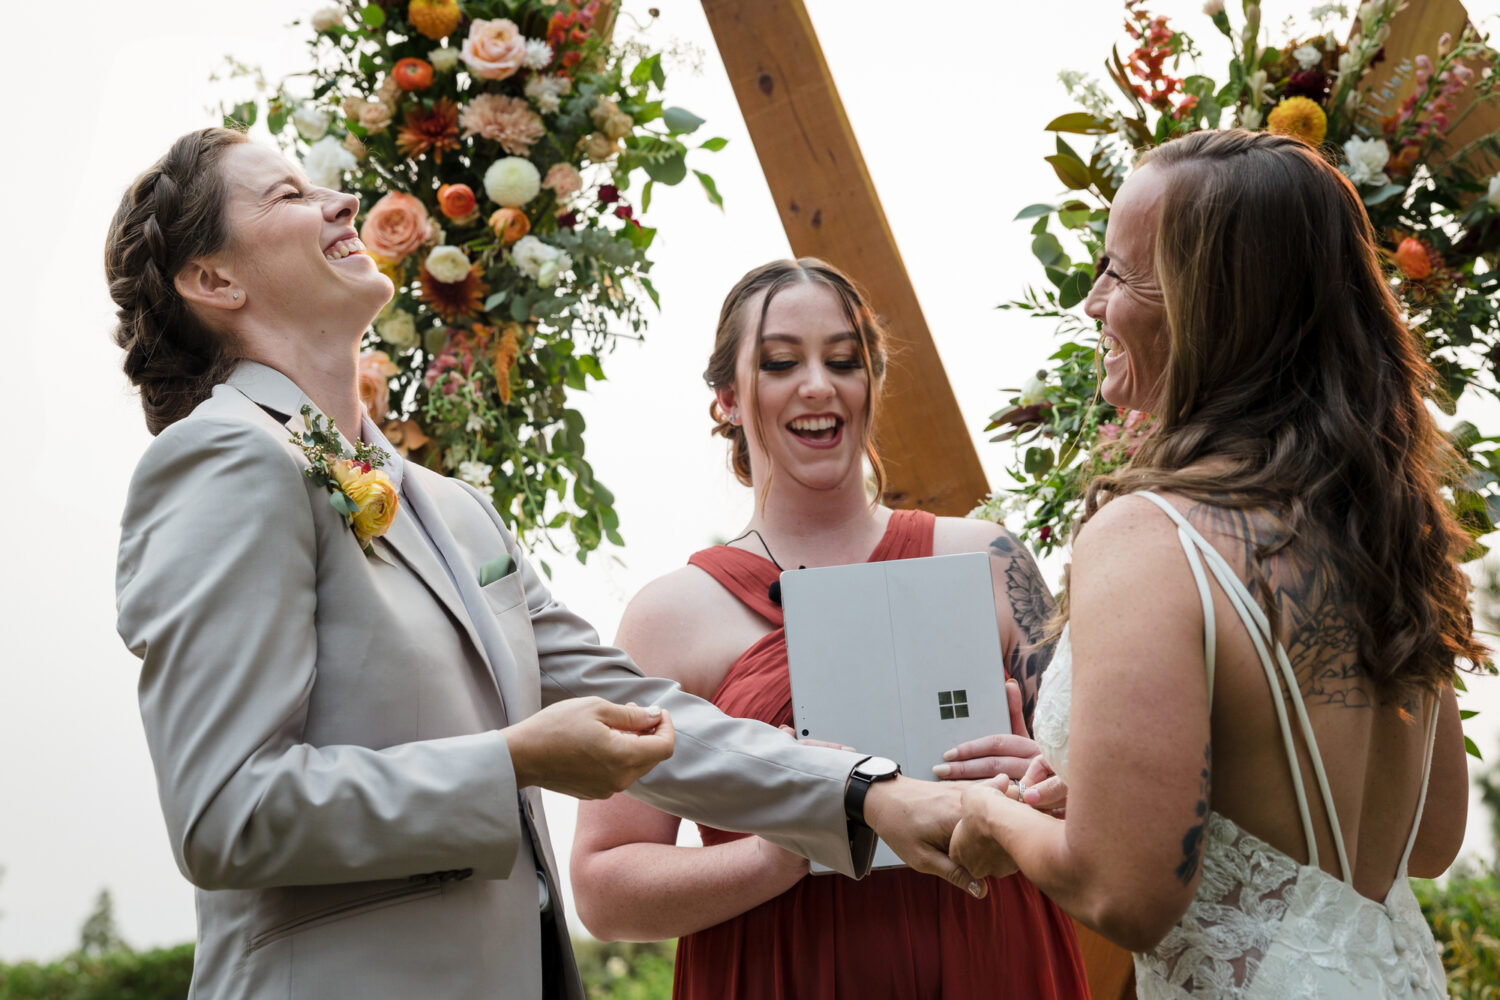 Two brides exchange wedding rings at their LGBTQ backyard wedding.